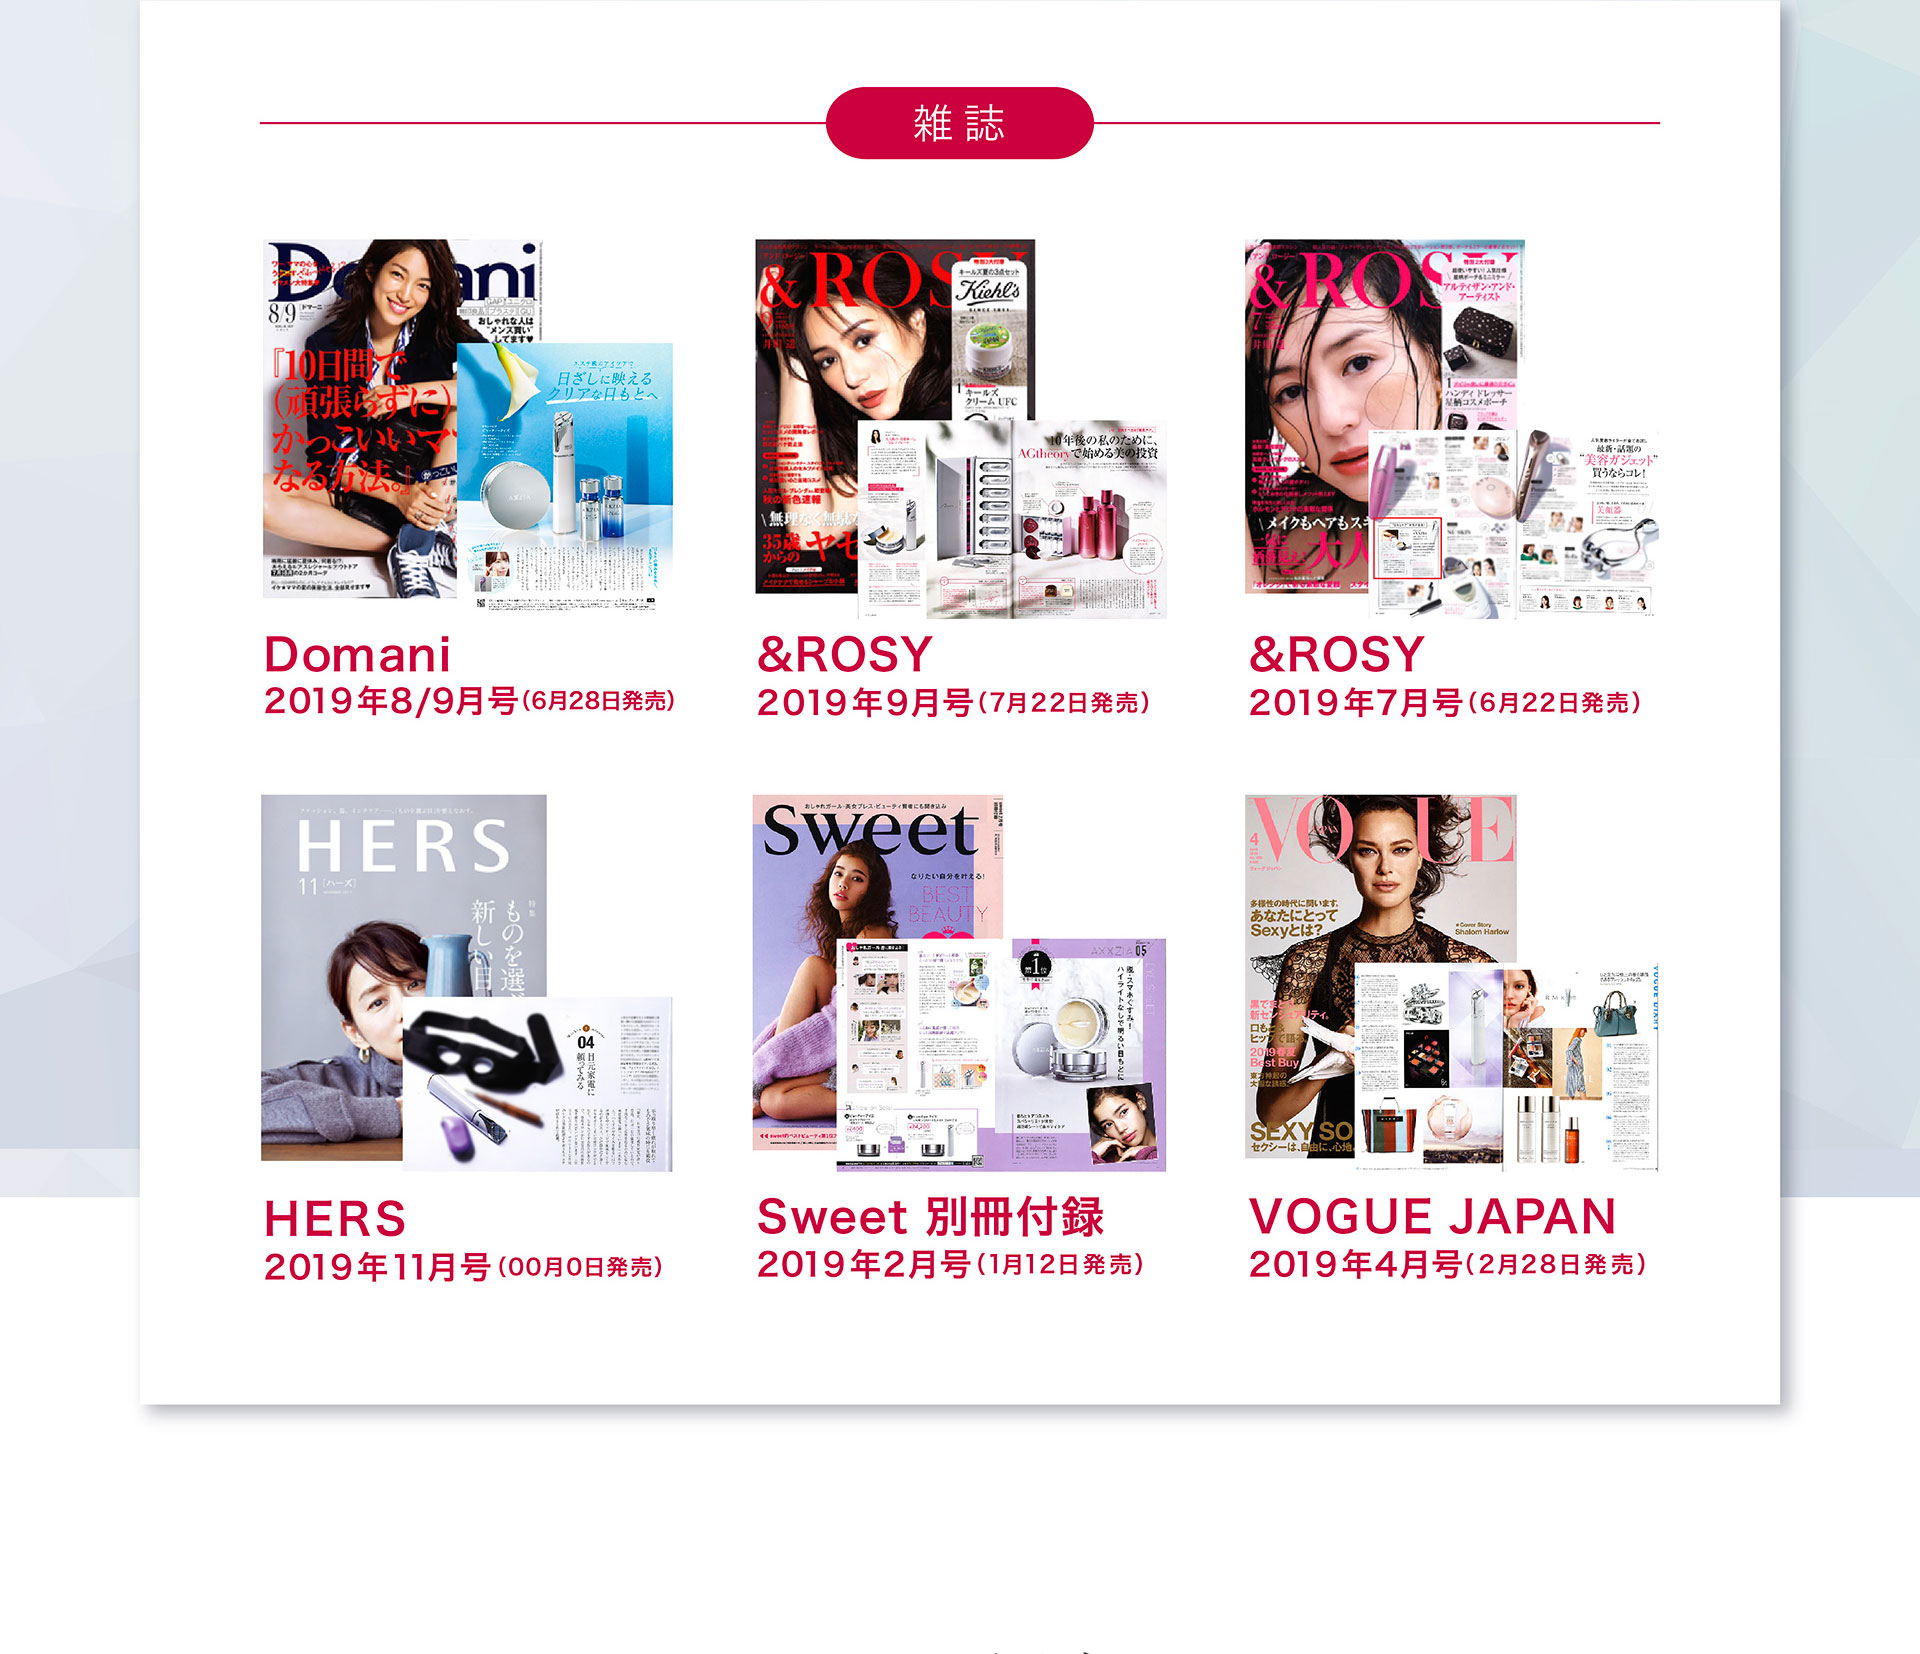 【雑誌】「Domani」2019年8/9月号、「&ROSY」2019年9月号、「&ROSY」2019年7月号、「HERS」2019年11月号、「Sweet別冊付録」2019年2月号、「VOGUE JAPAN」2019年4月号